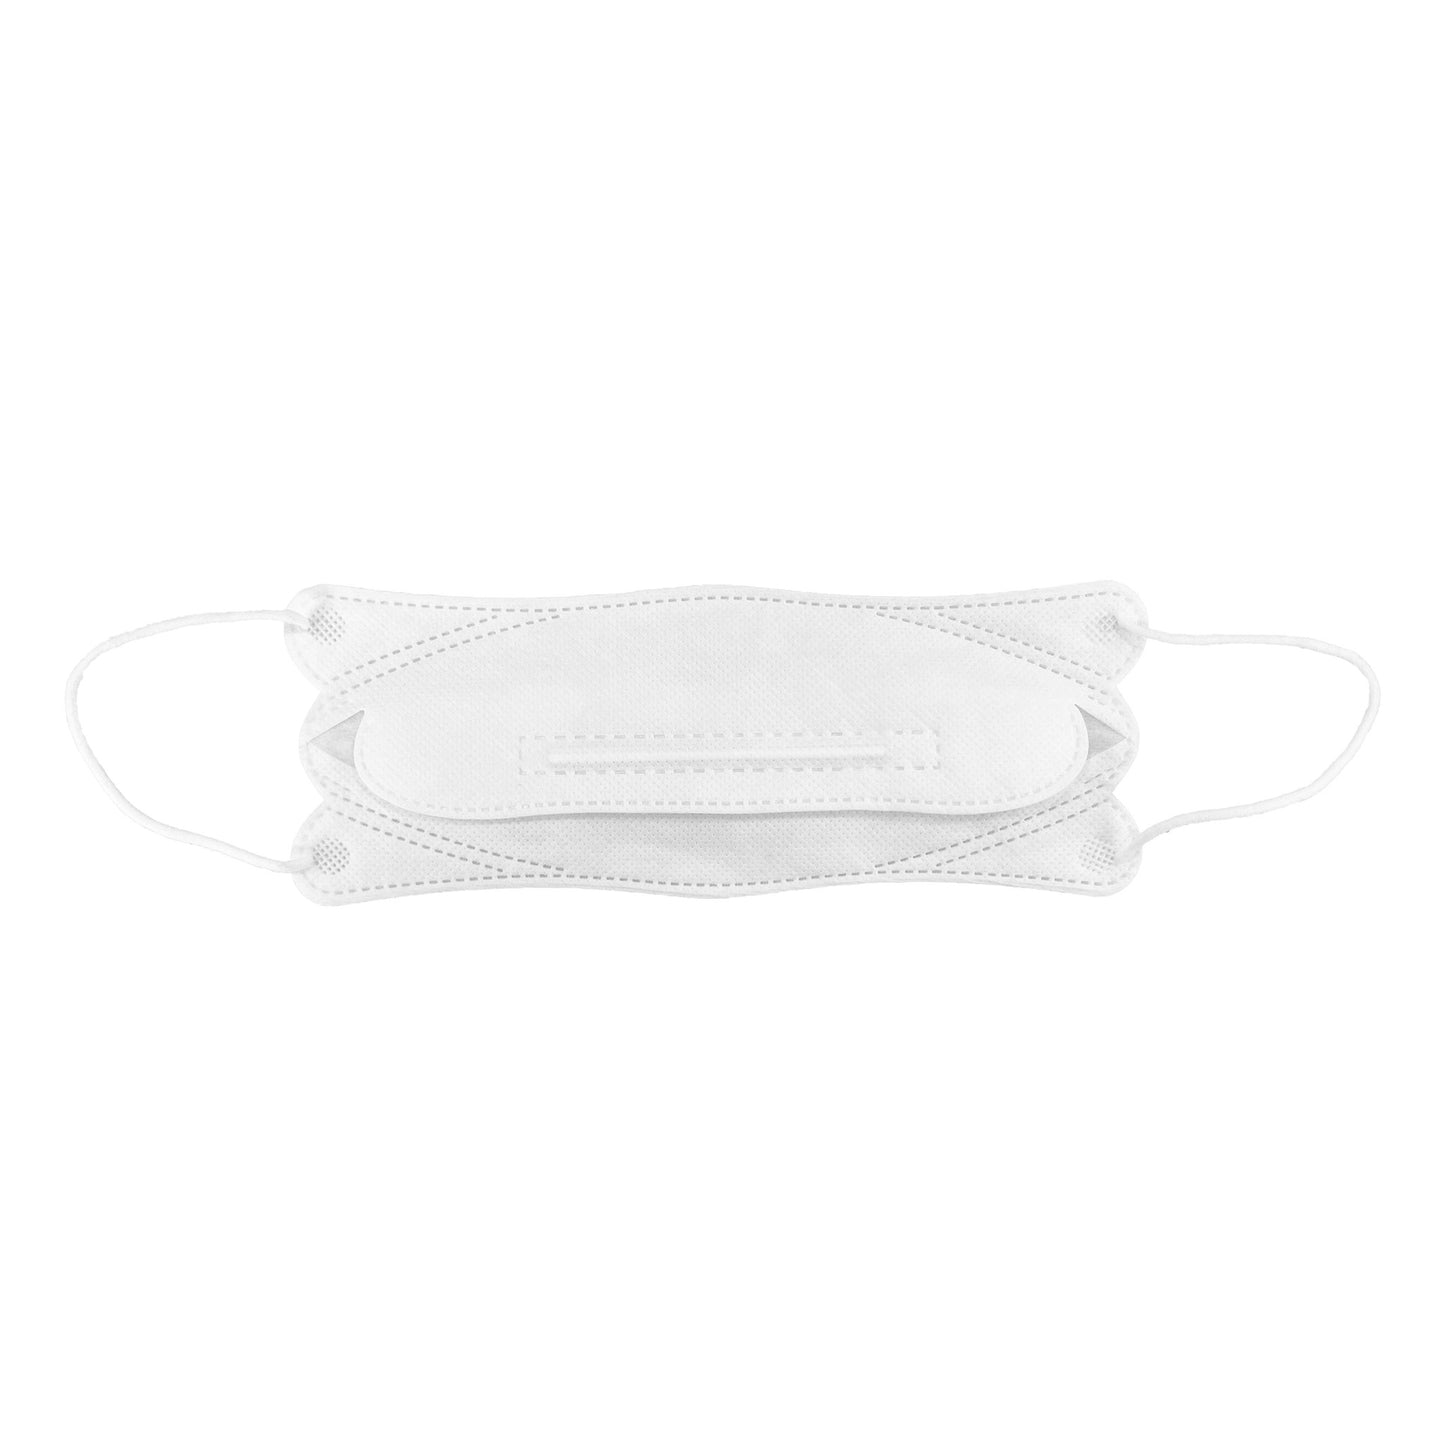 Air Queen Nanofiber Filter Mask - White